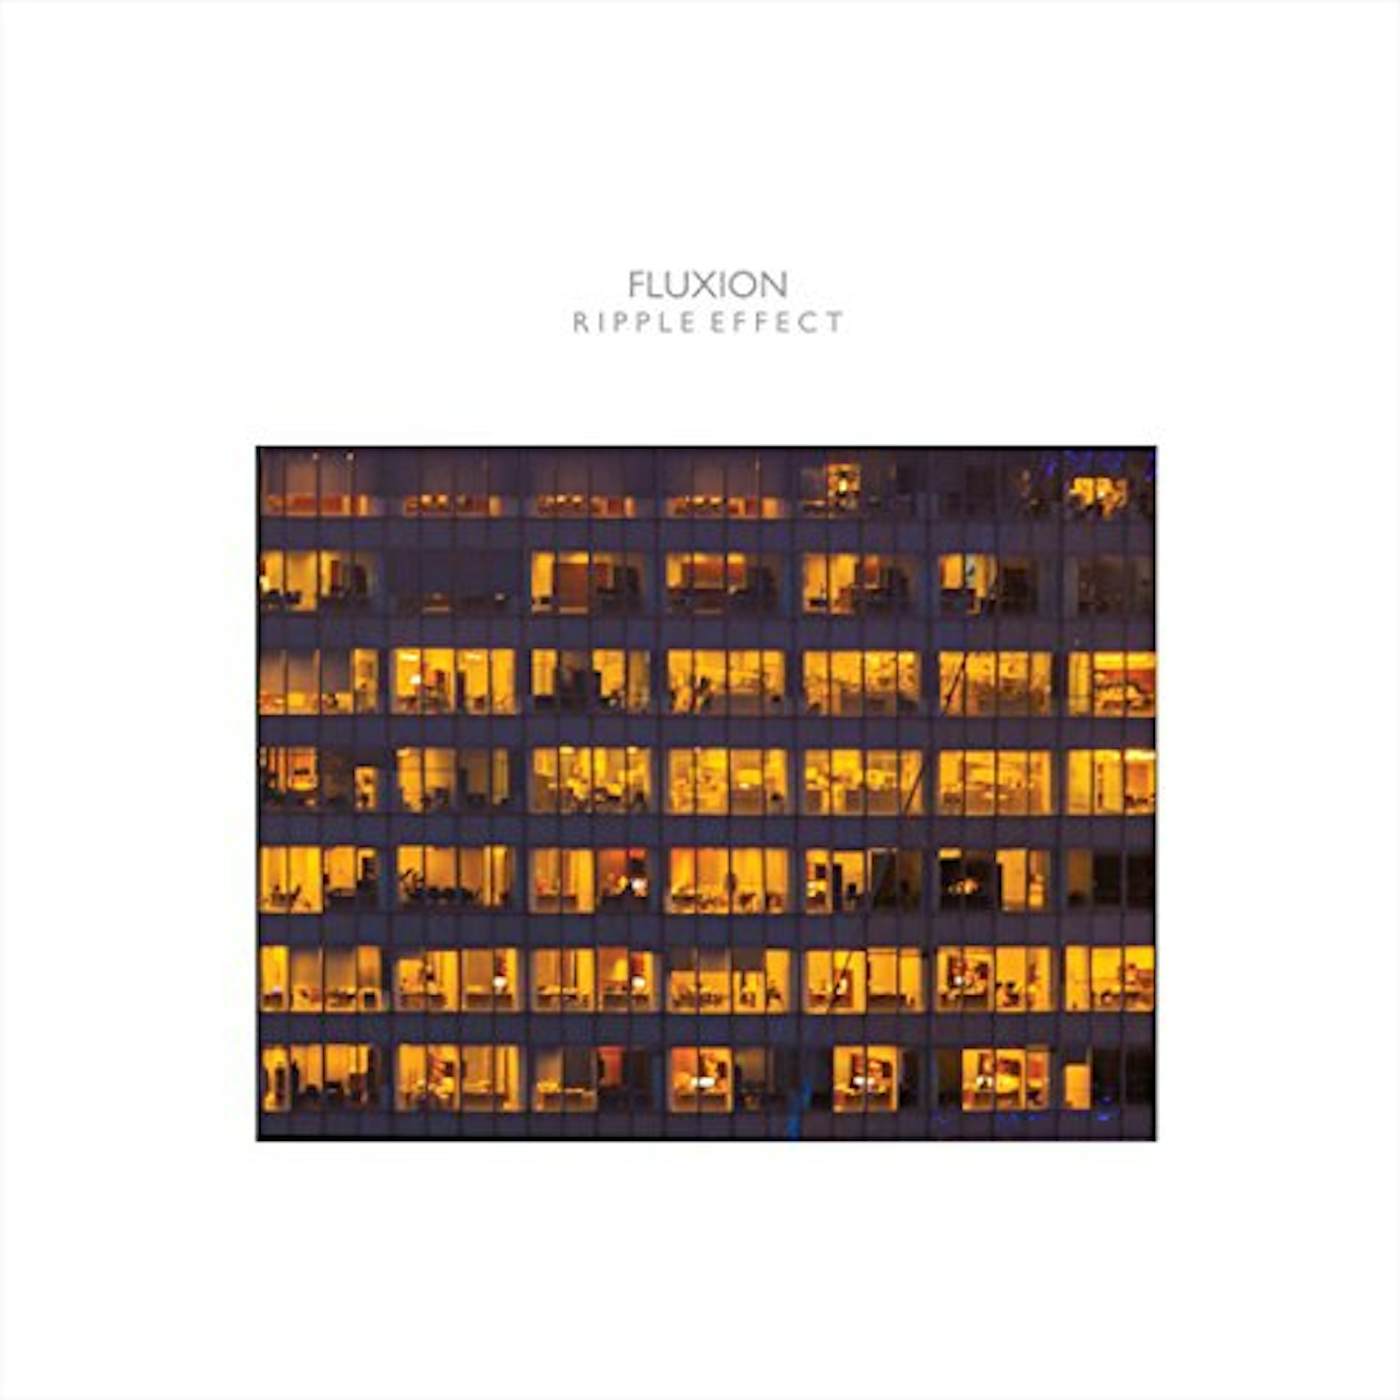 Fluxion Ripple Effect Vinyl Record